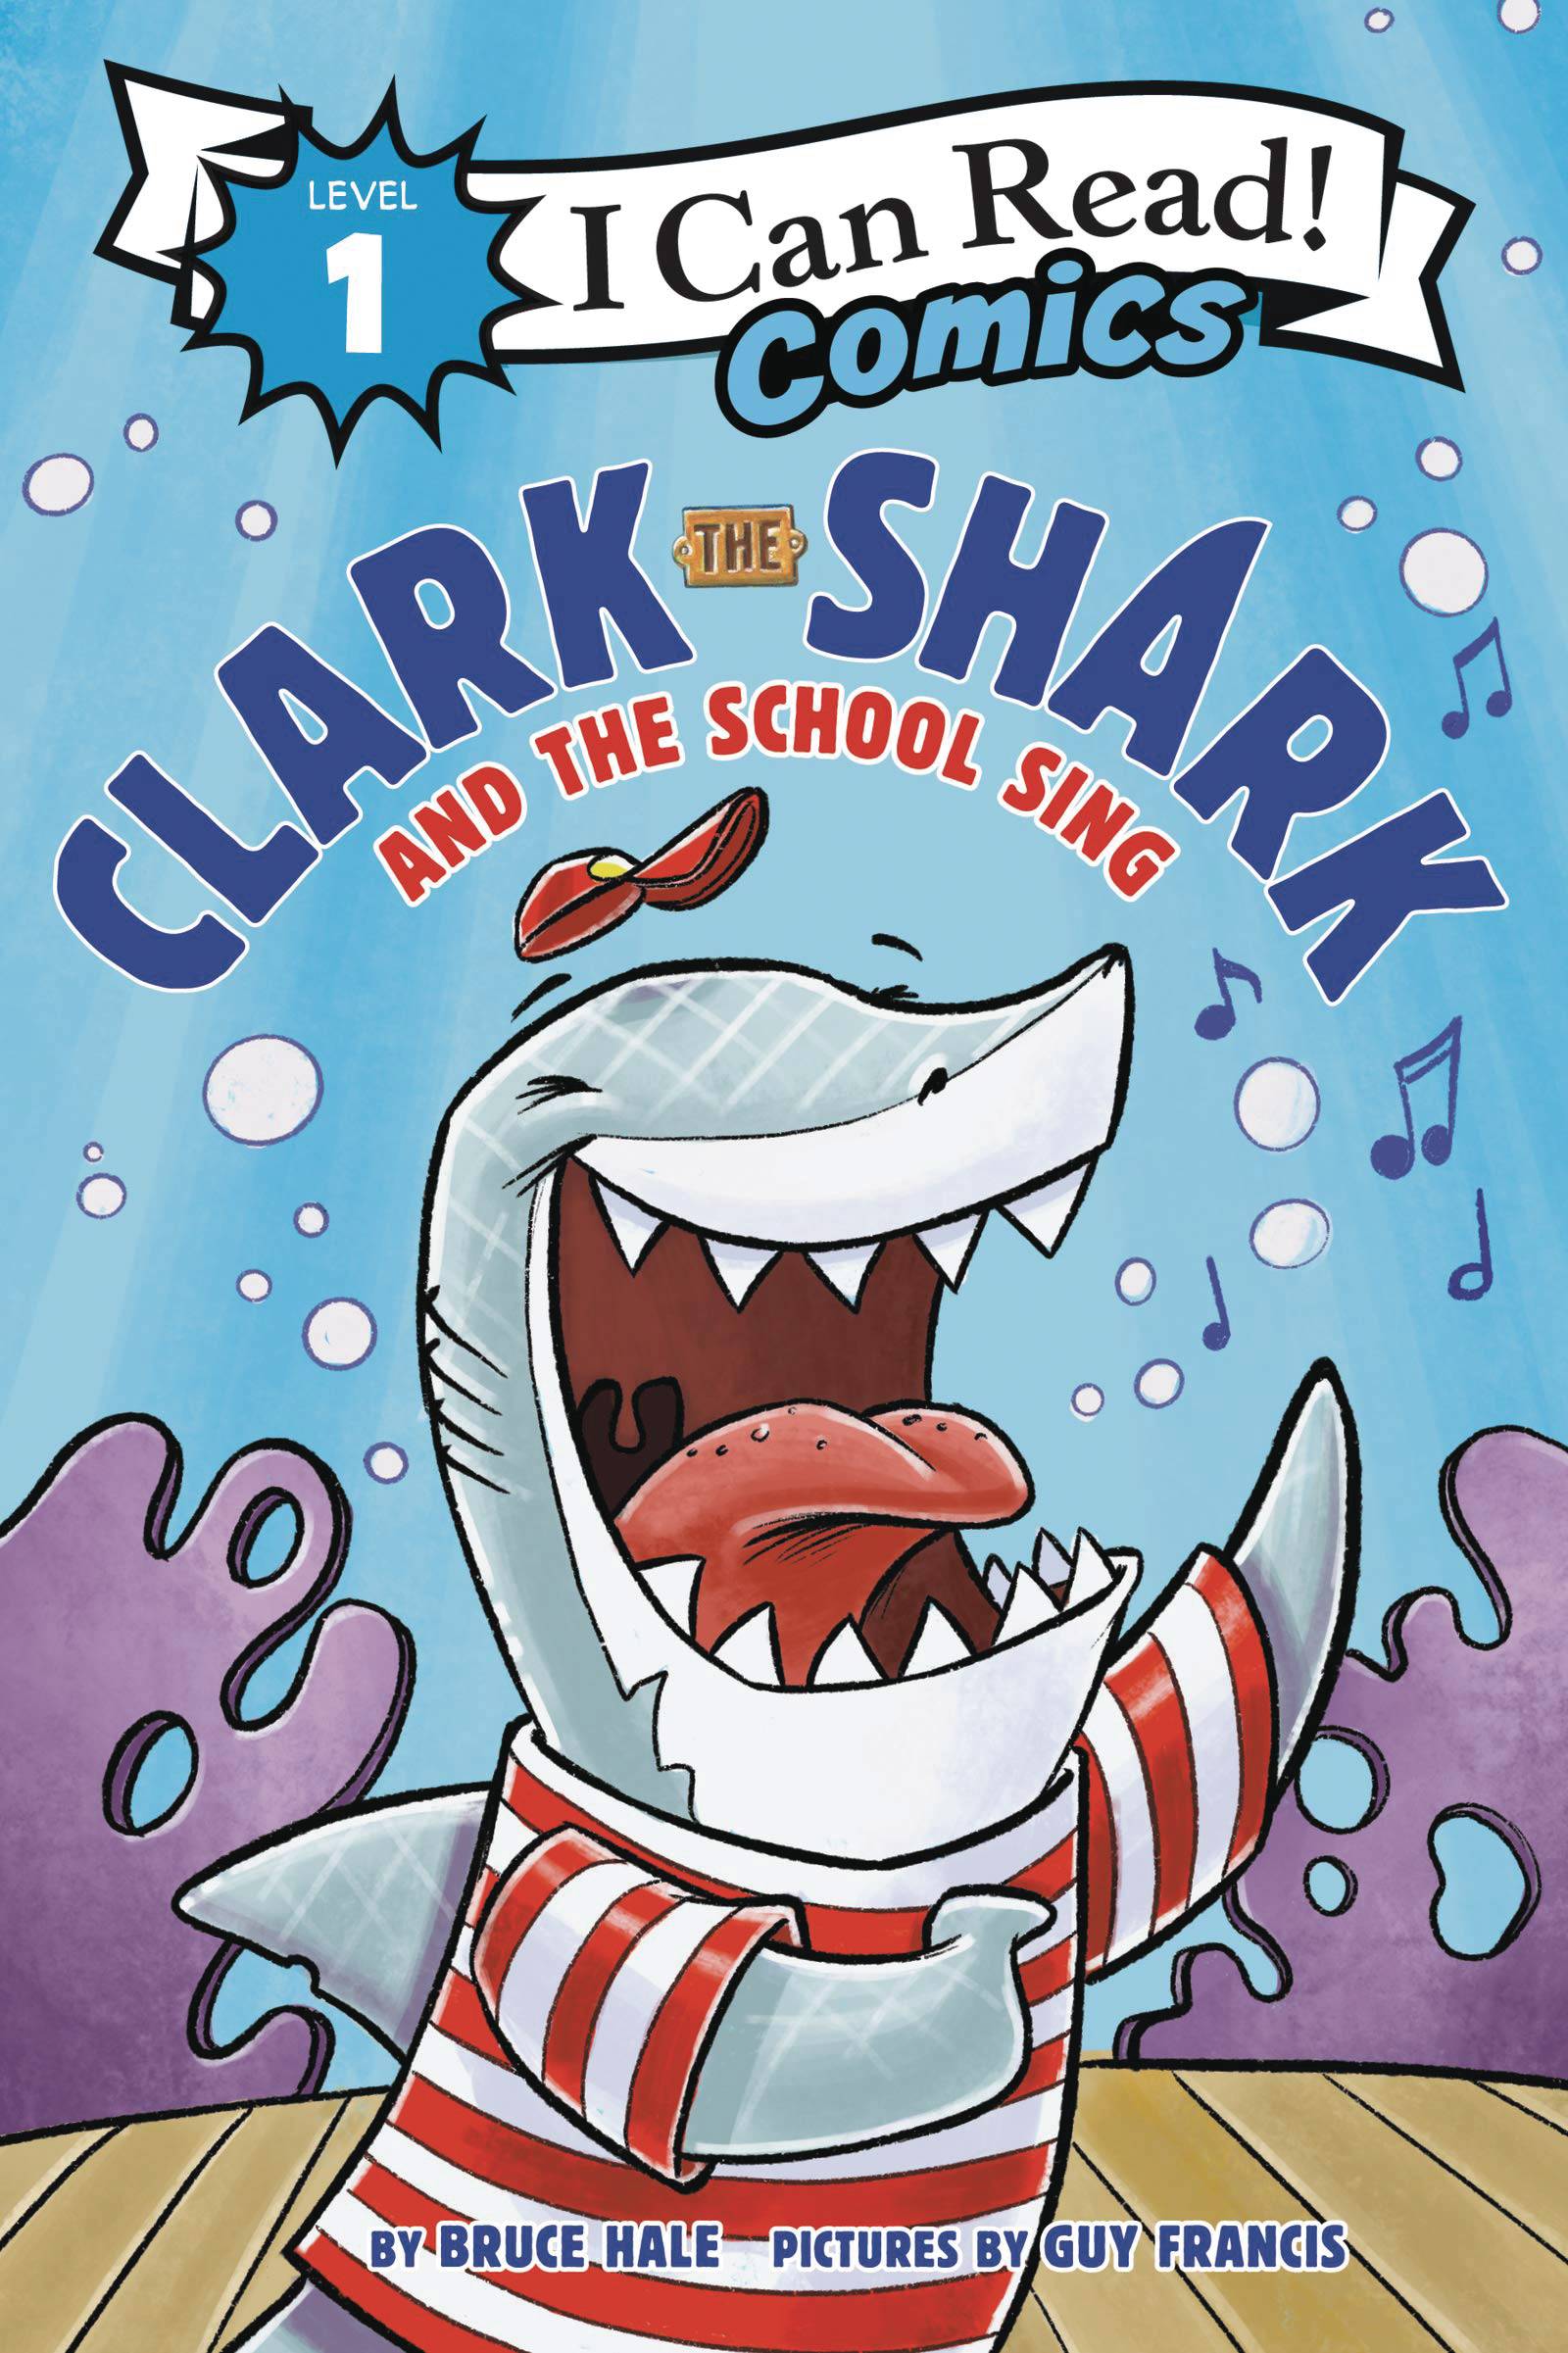 I CAN READ COMICS LEVEL 1 HC CLARK SHARK & SCHOOL SING